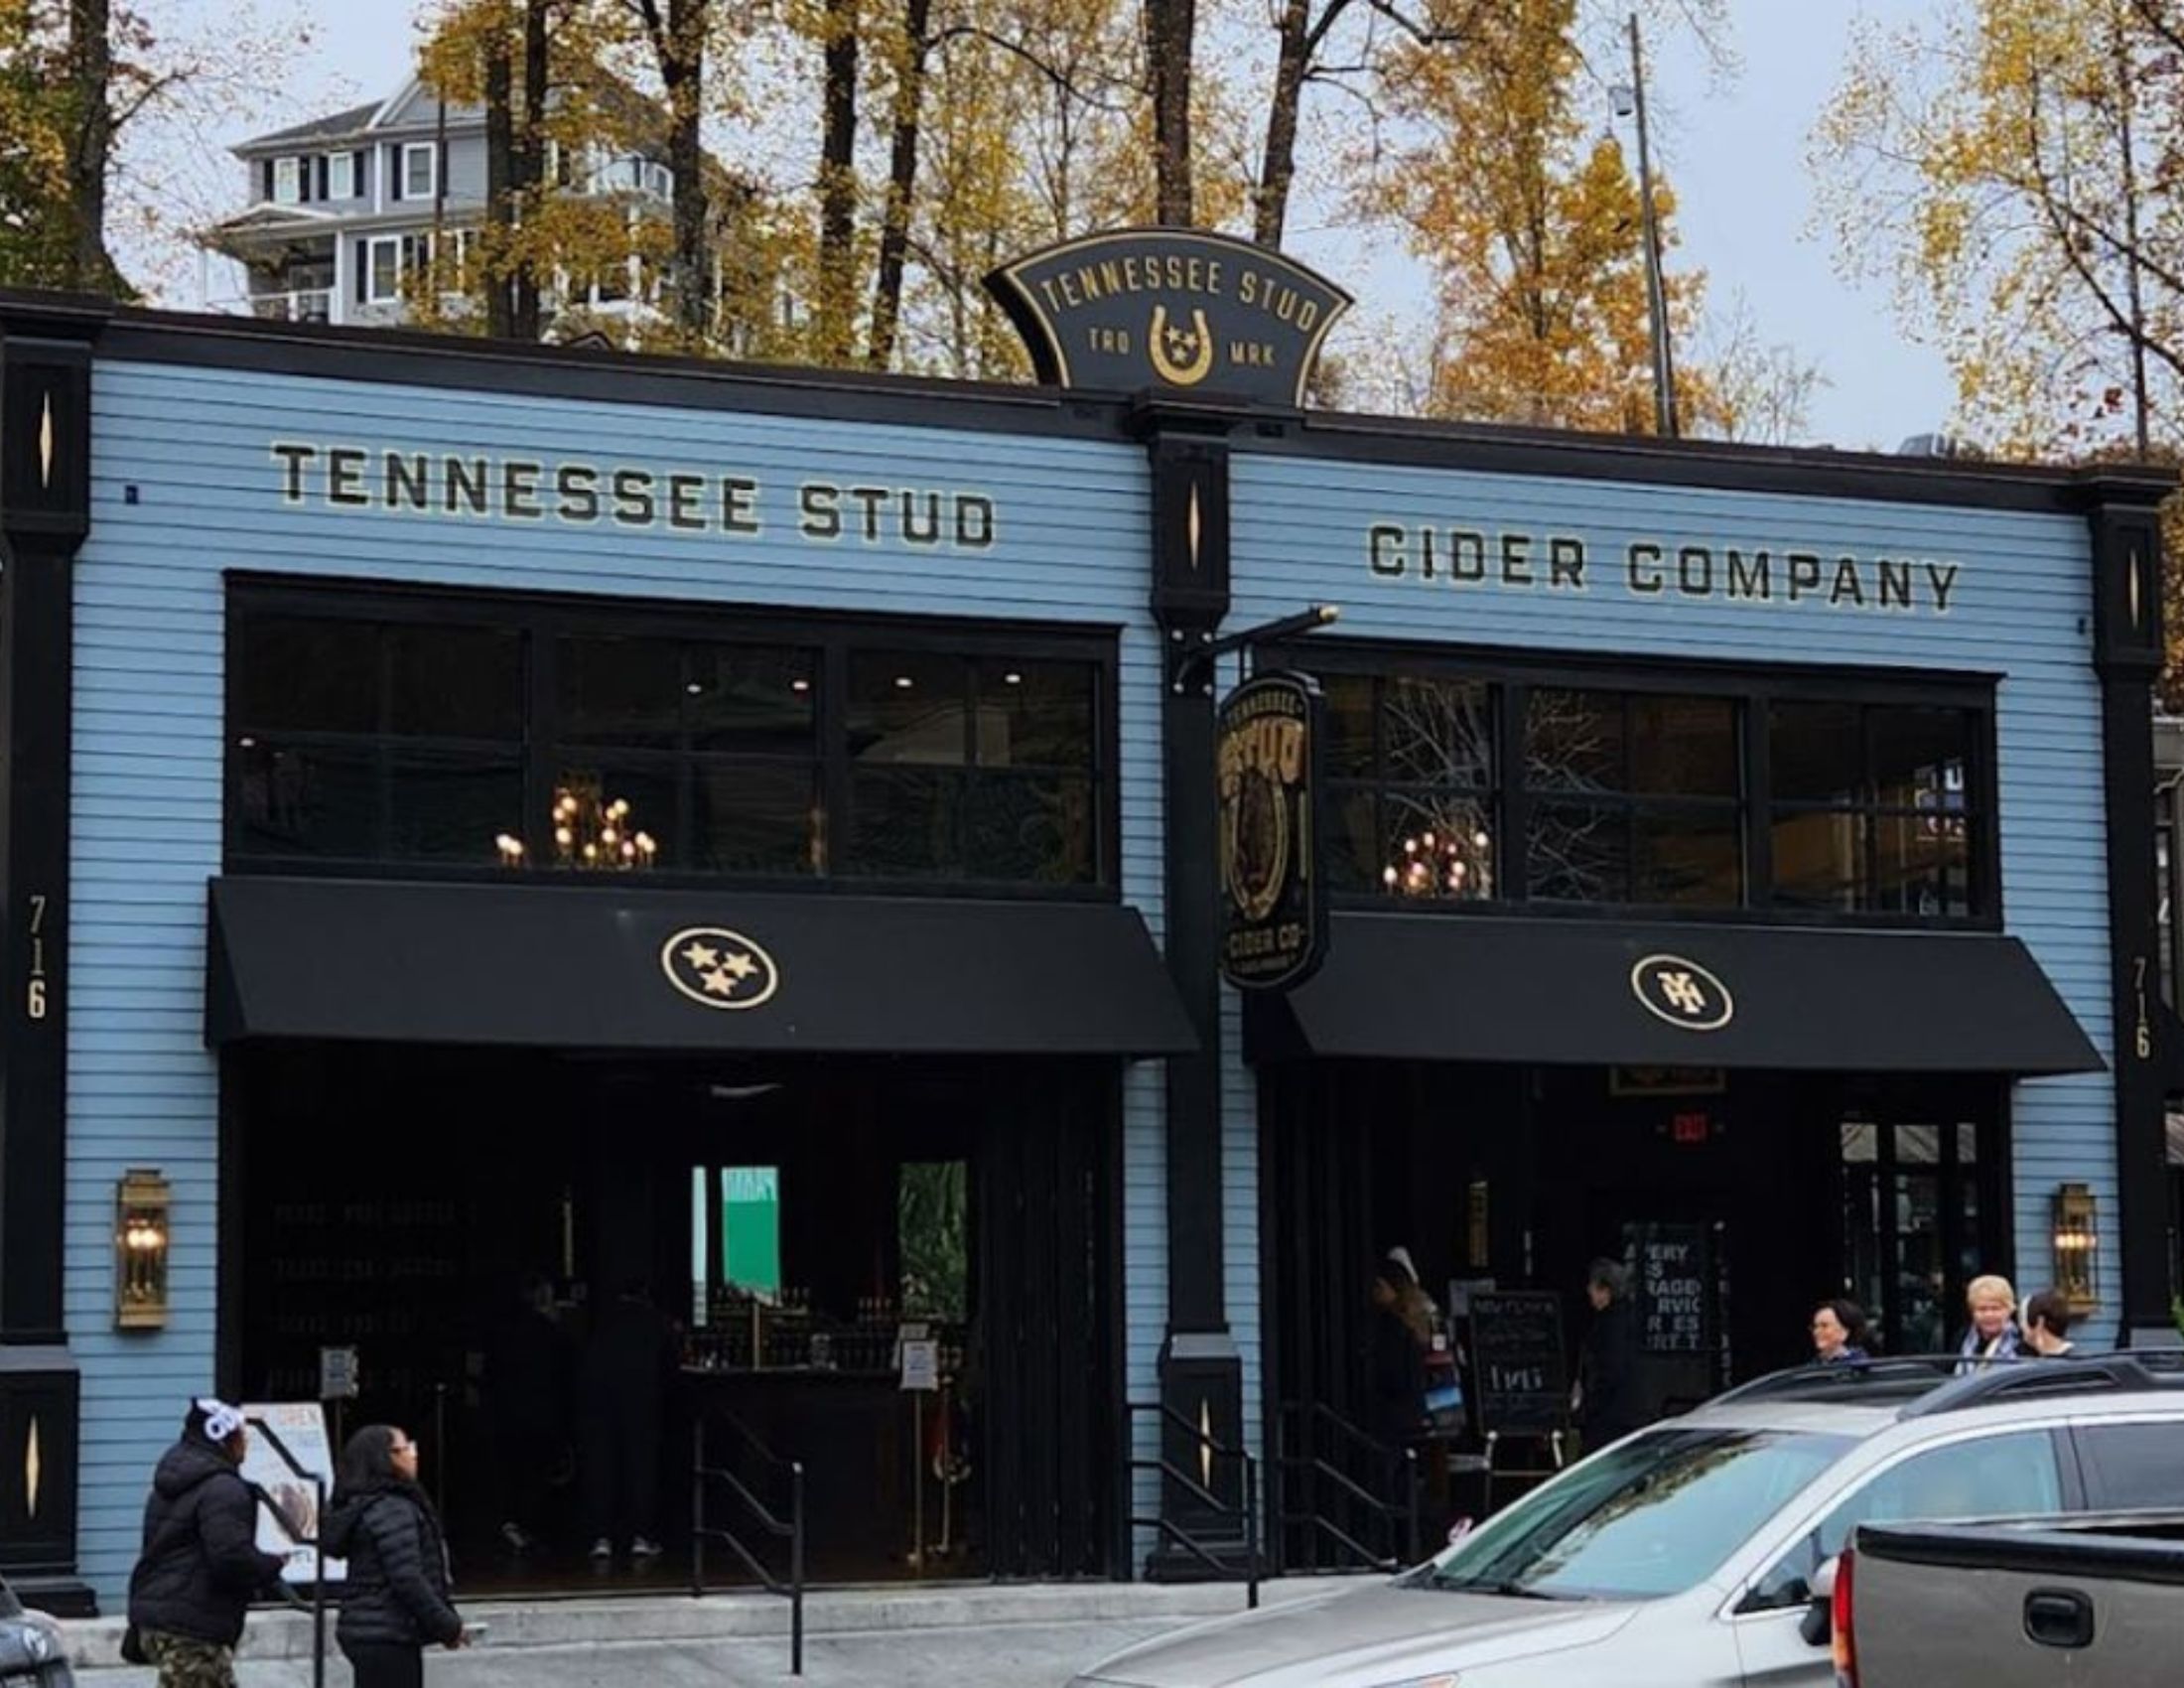 Tennessee Stud Cider Company